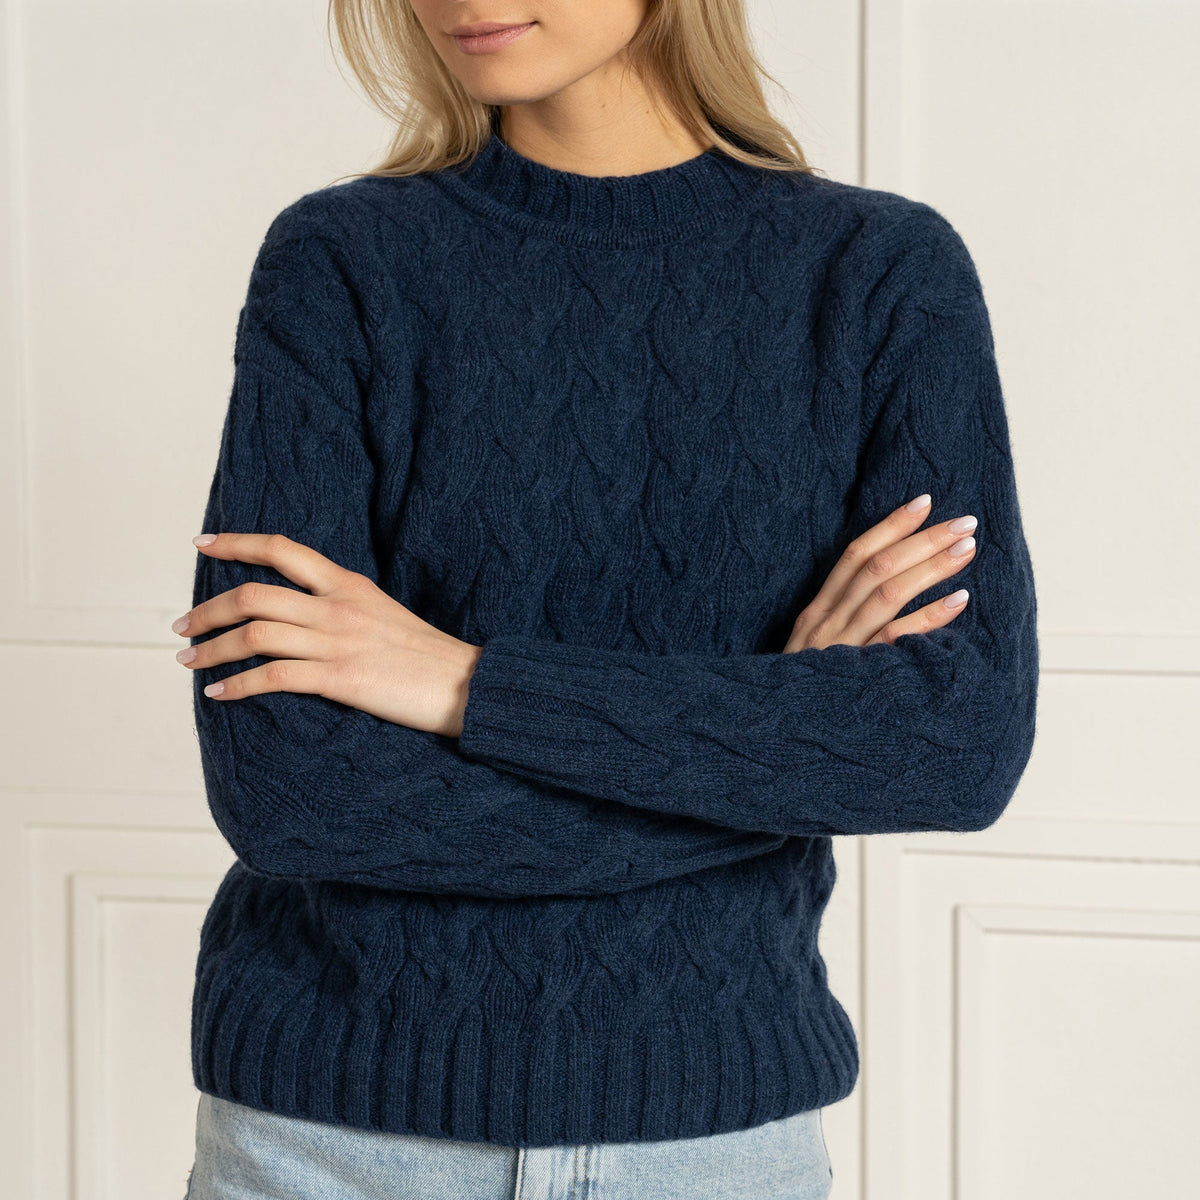 MENIQUE 100% Merino Wool Womens Knit Cable Sweater Prague Dark Blue